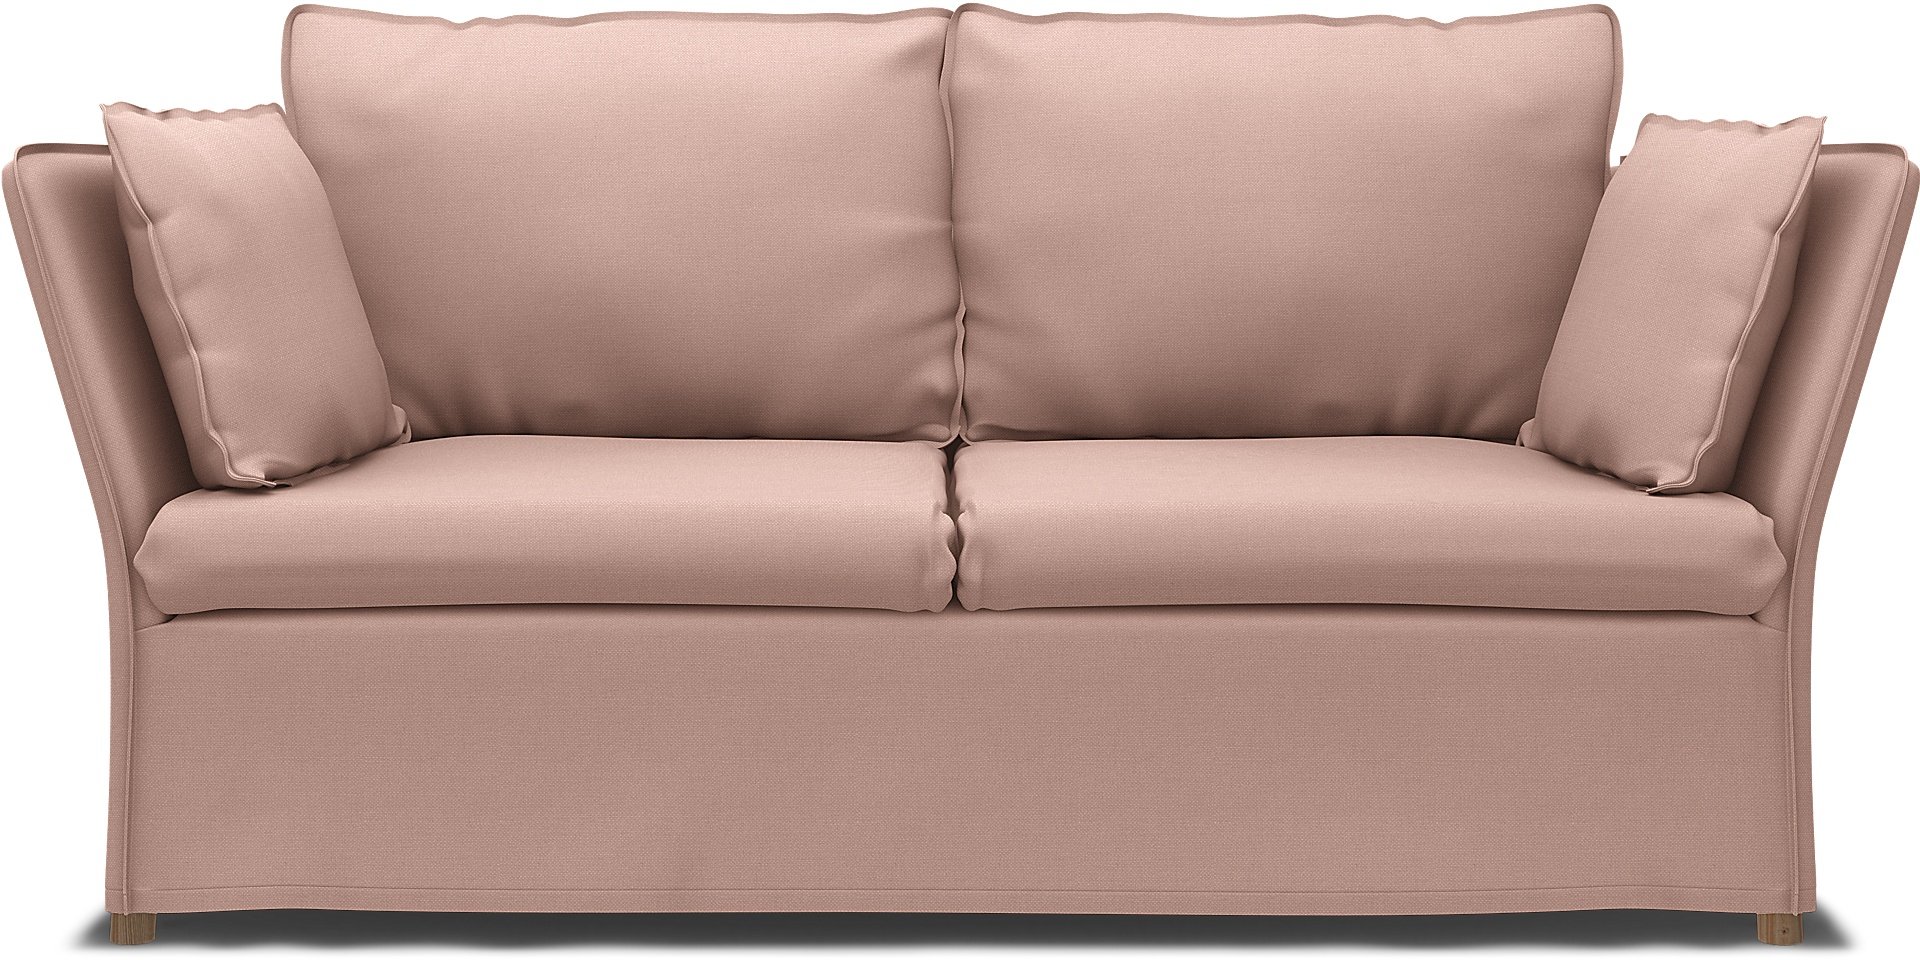 IKEA - Backsalen 2 seater sofa, Blush, Linen - Bemz